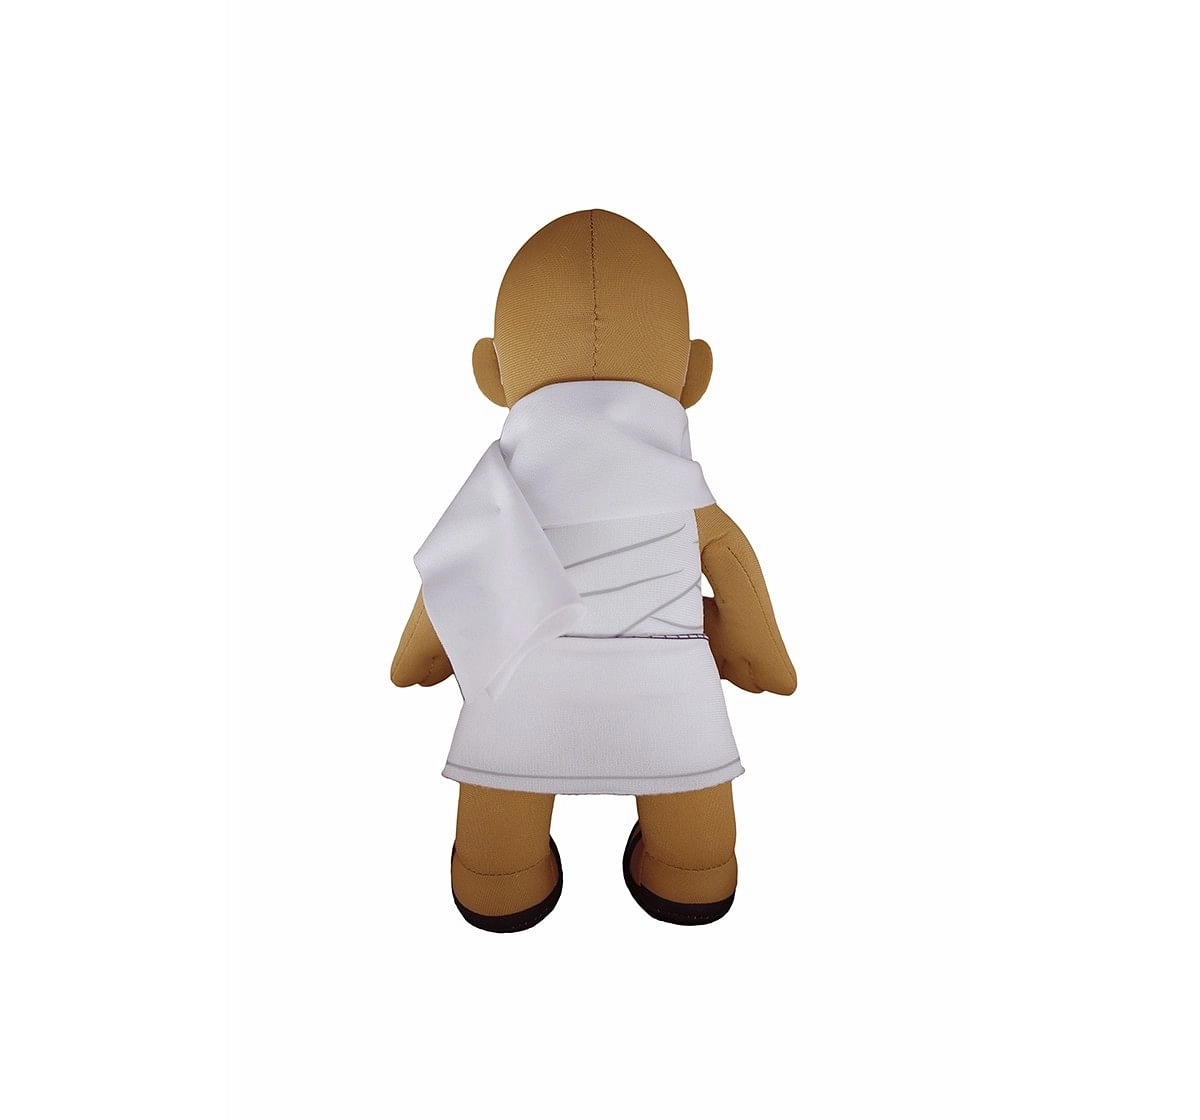 Plushona 10 Inch Mahatma Gandhi Plush Toy for Kids age 10Y+ (Brown)